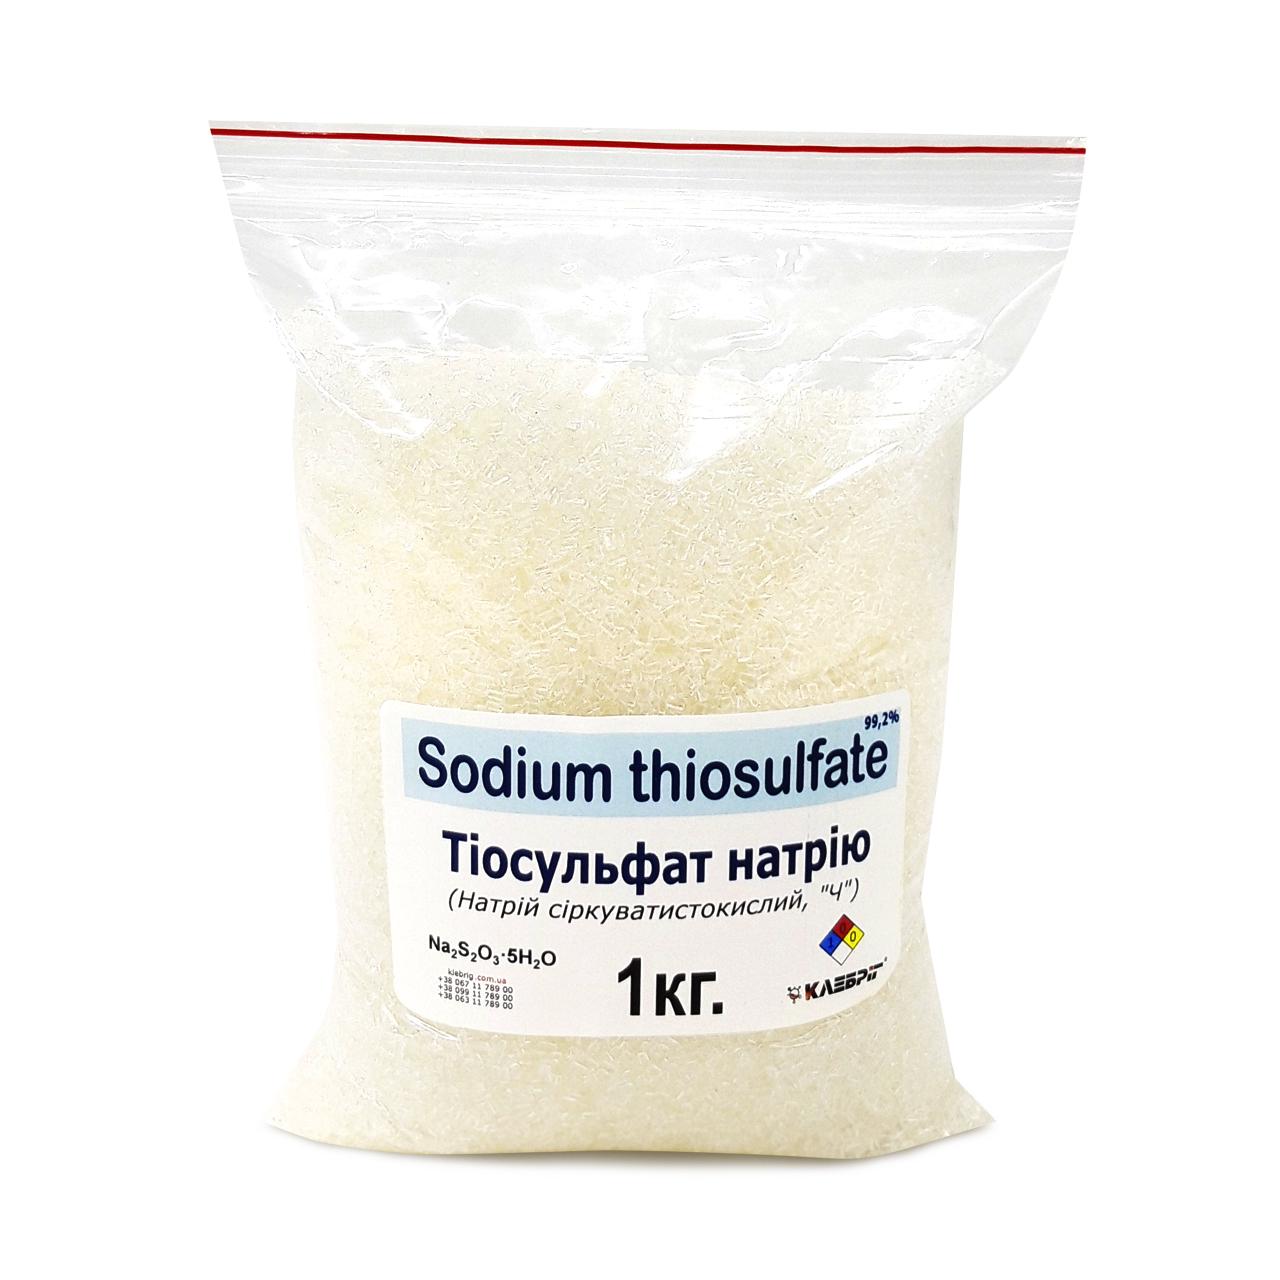 Натрия тиосульфат для фиксажа Ч Klebrig натрий серноватистокислый 1 кг ТіСЛФТ-1